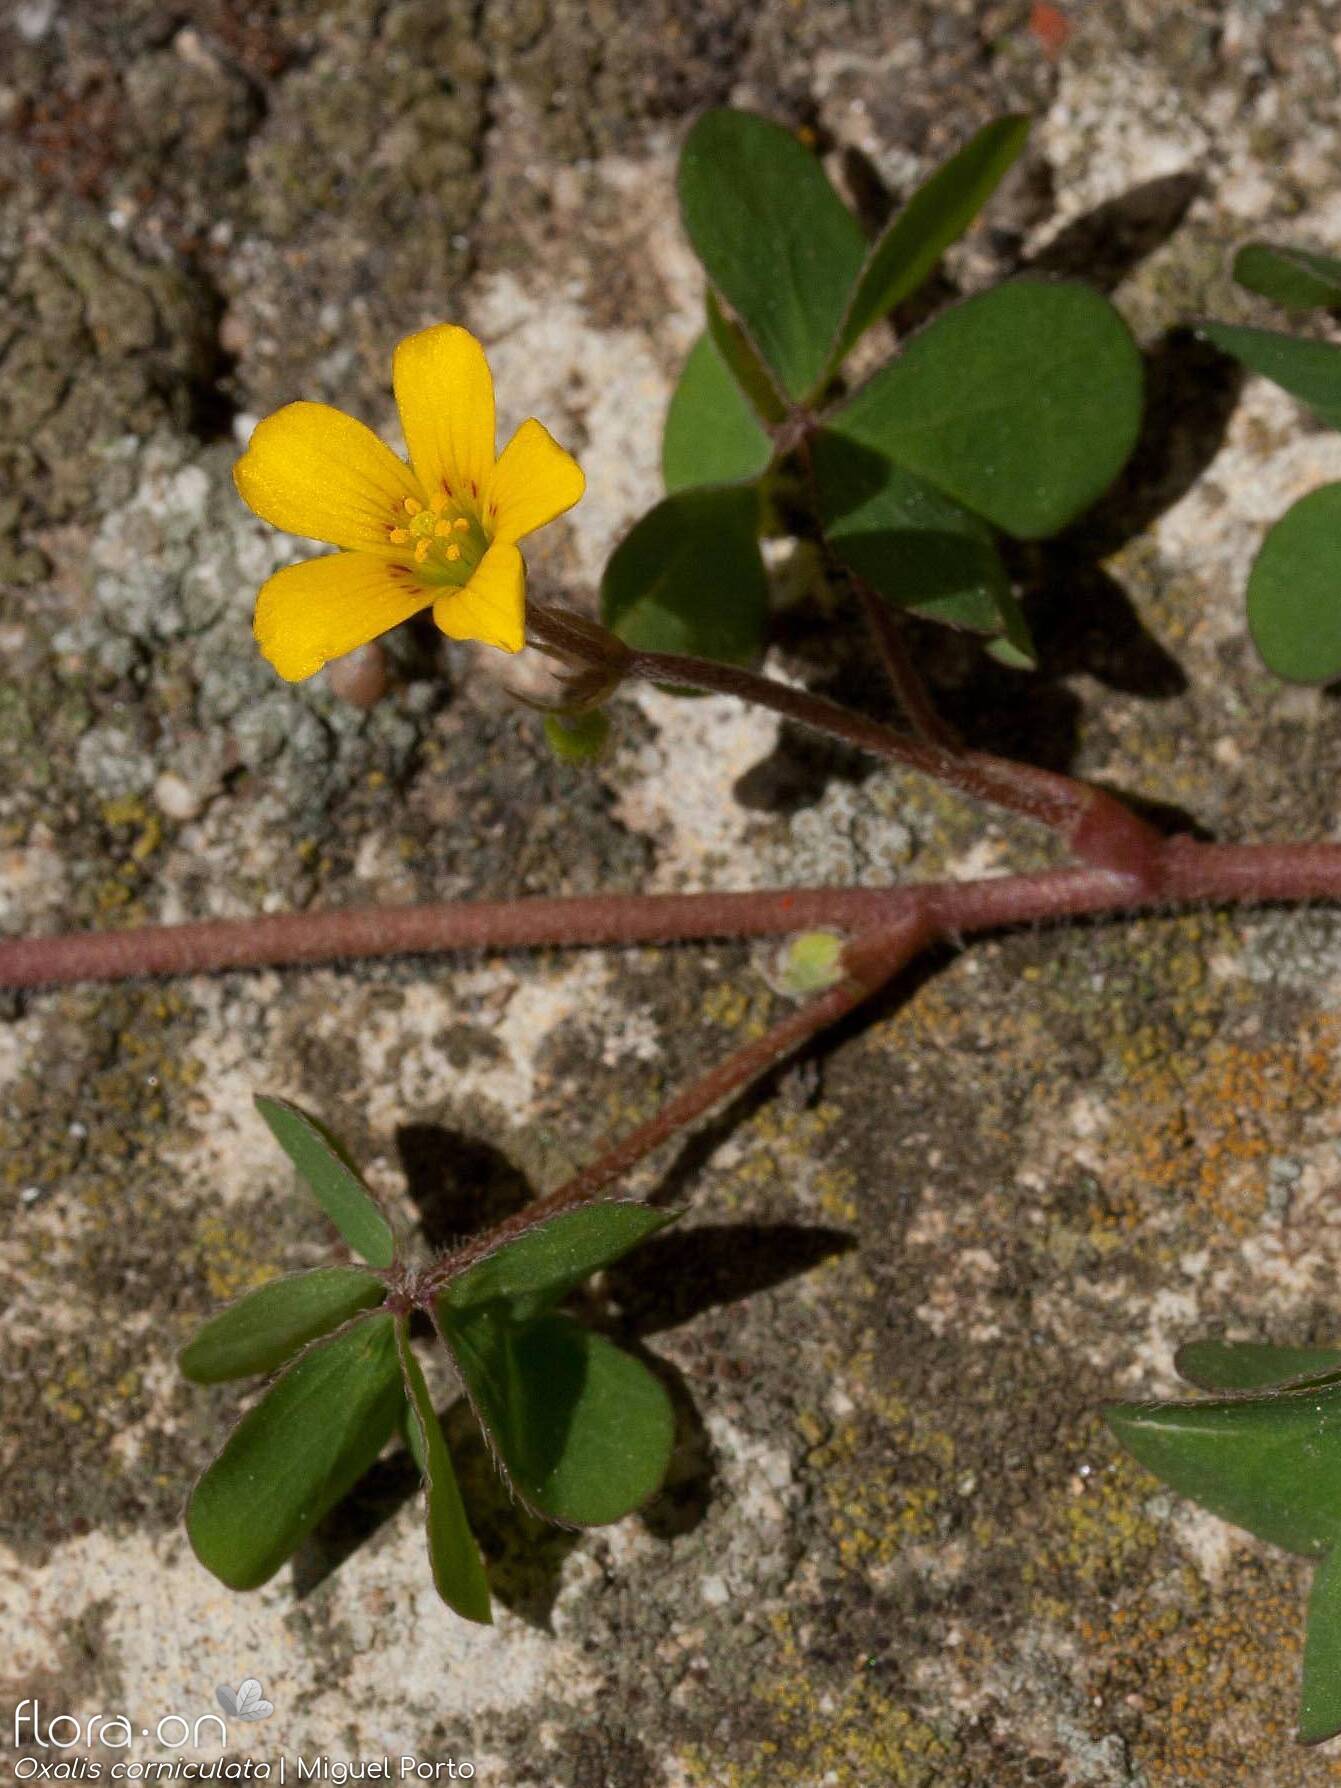 Oxalis corniculata - Flor (geral) | Miguel Porto; CC BY-NC 4.0